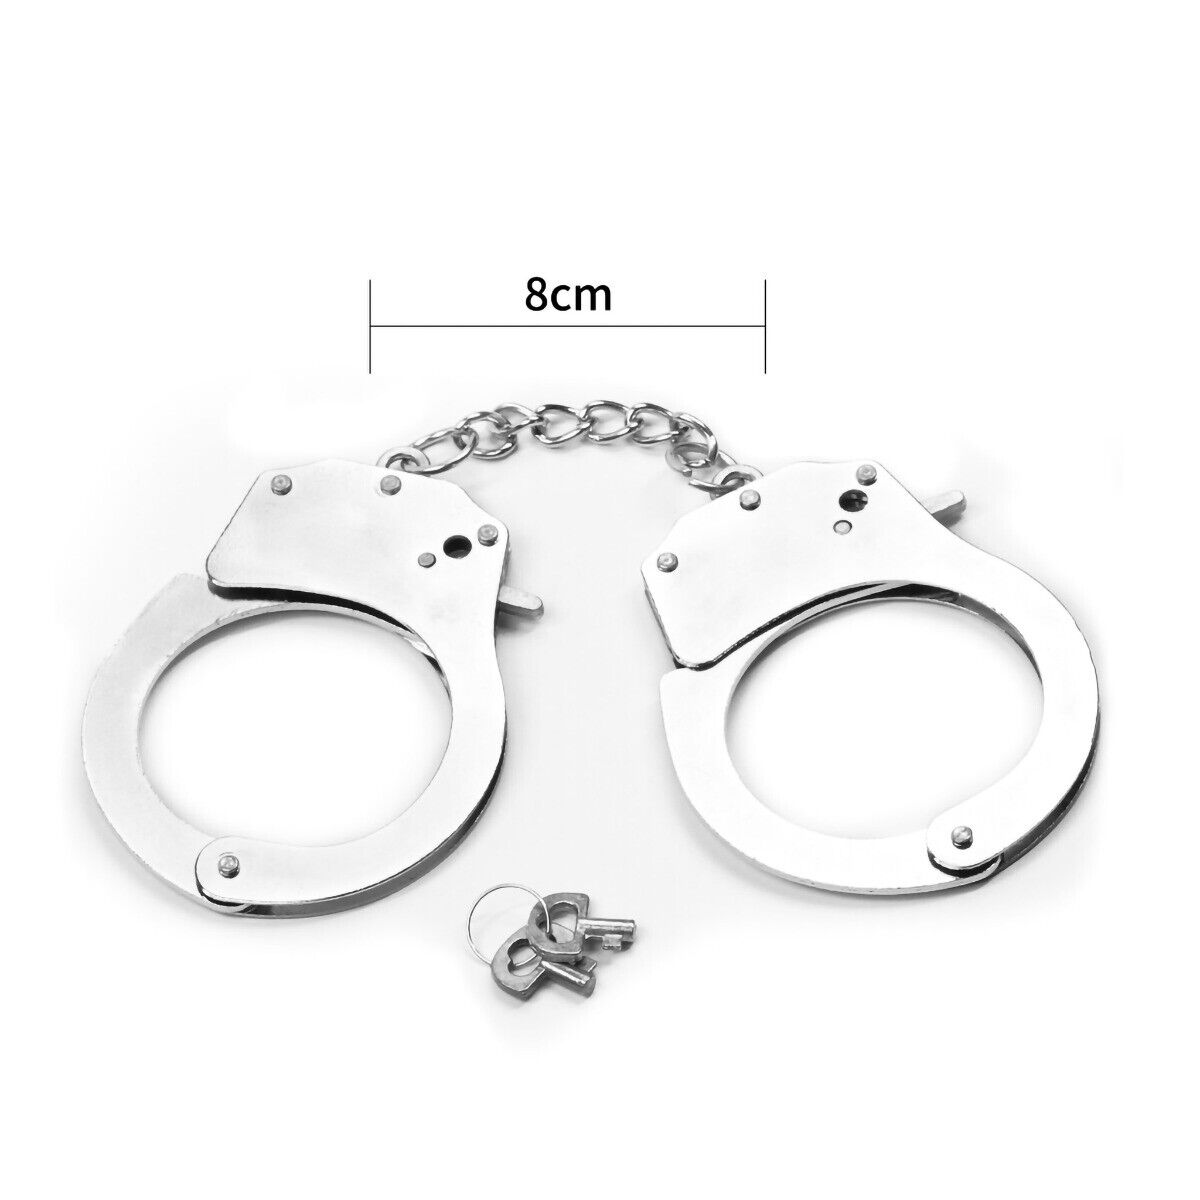 Steel Silver Metal Handcuffs Wrist Hand Cuffs Fetish SM Bondage Sex Toy